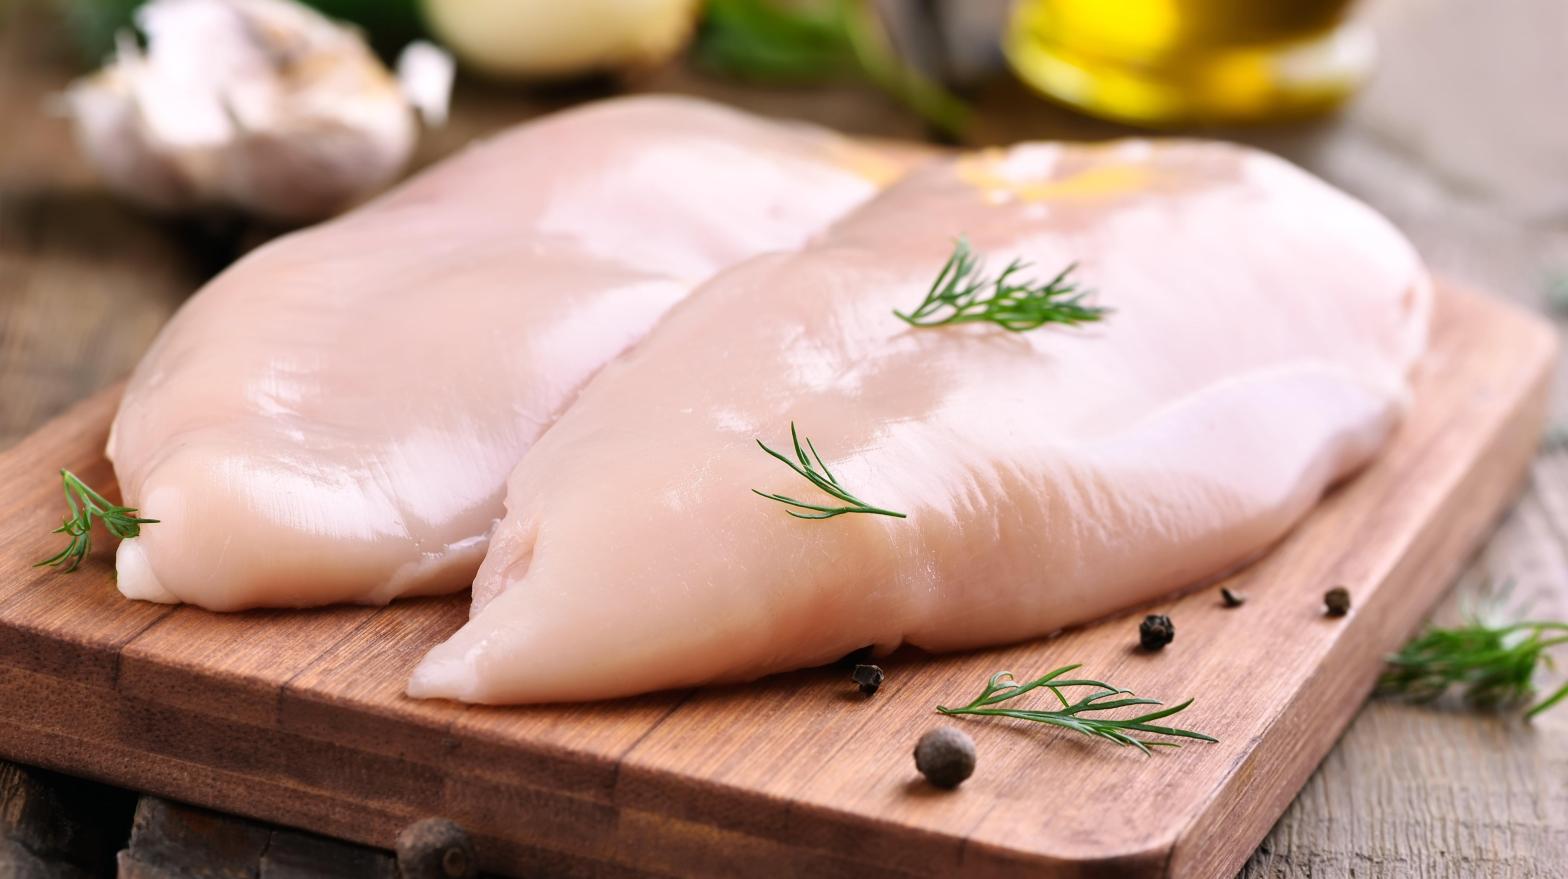 Chicken is a common source of Salmonella infection, especially if undercooked. (Image: Tatiana Volgutova, Shutterstock)